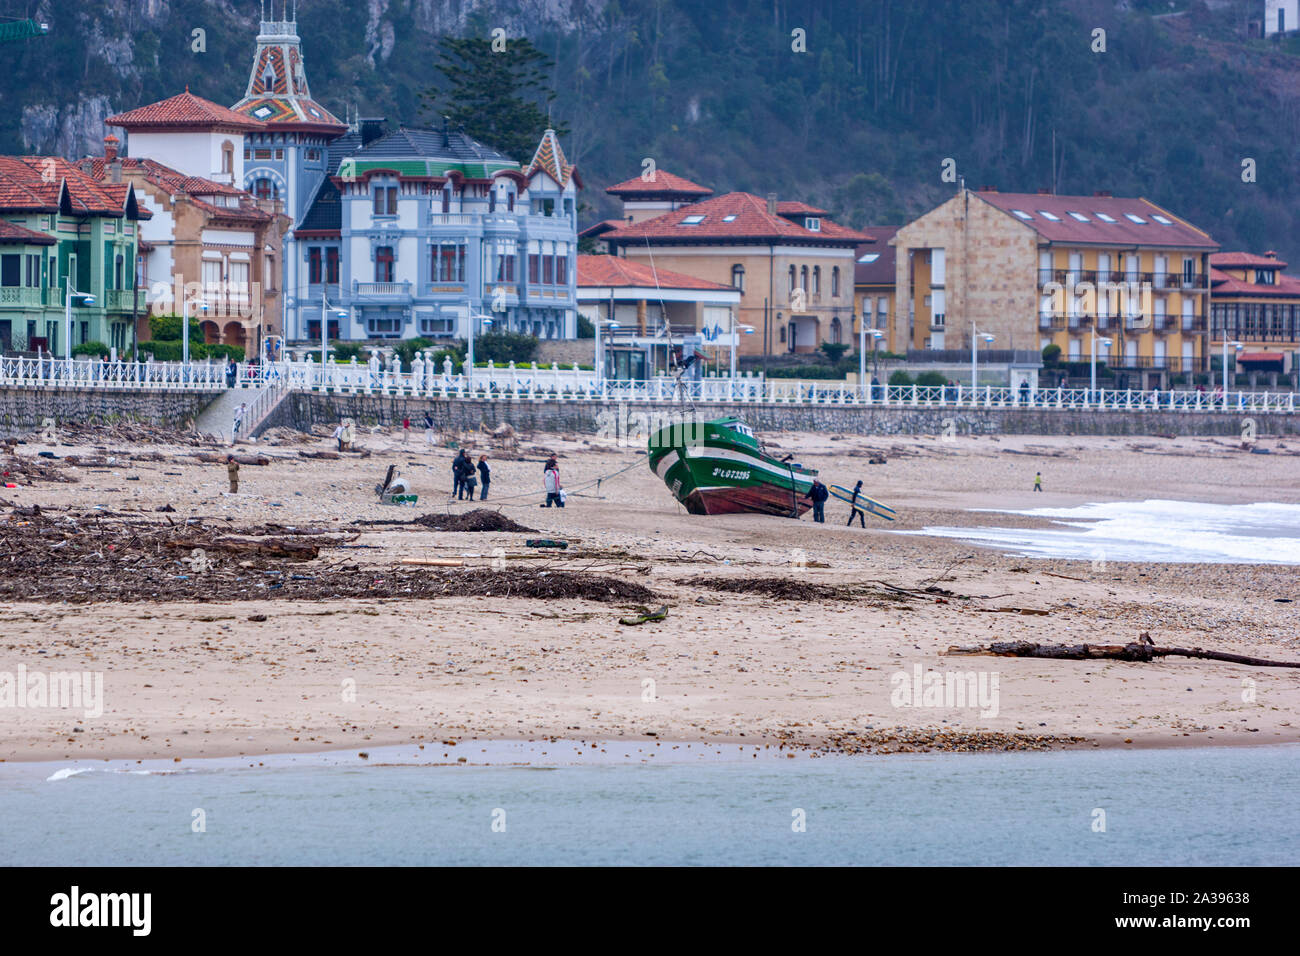 Se hundió barco pesquero canguro en la Playa de Santa Marina, Ribadesella, Asturias, España Foto de stock